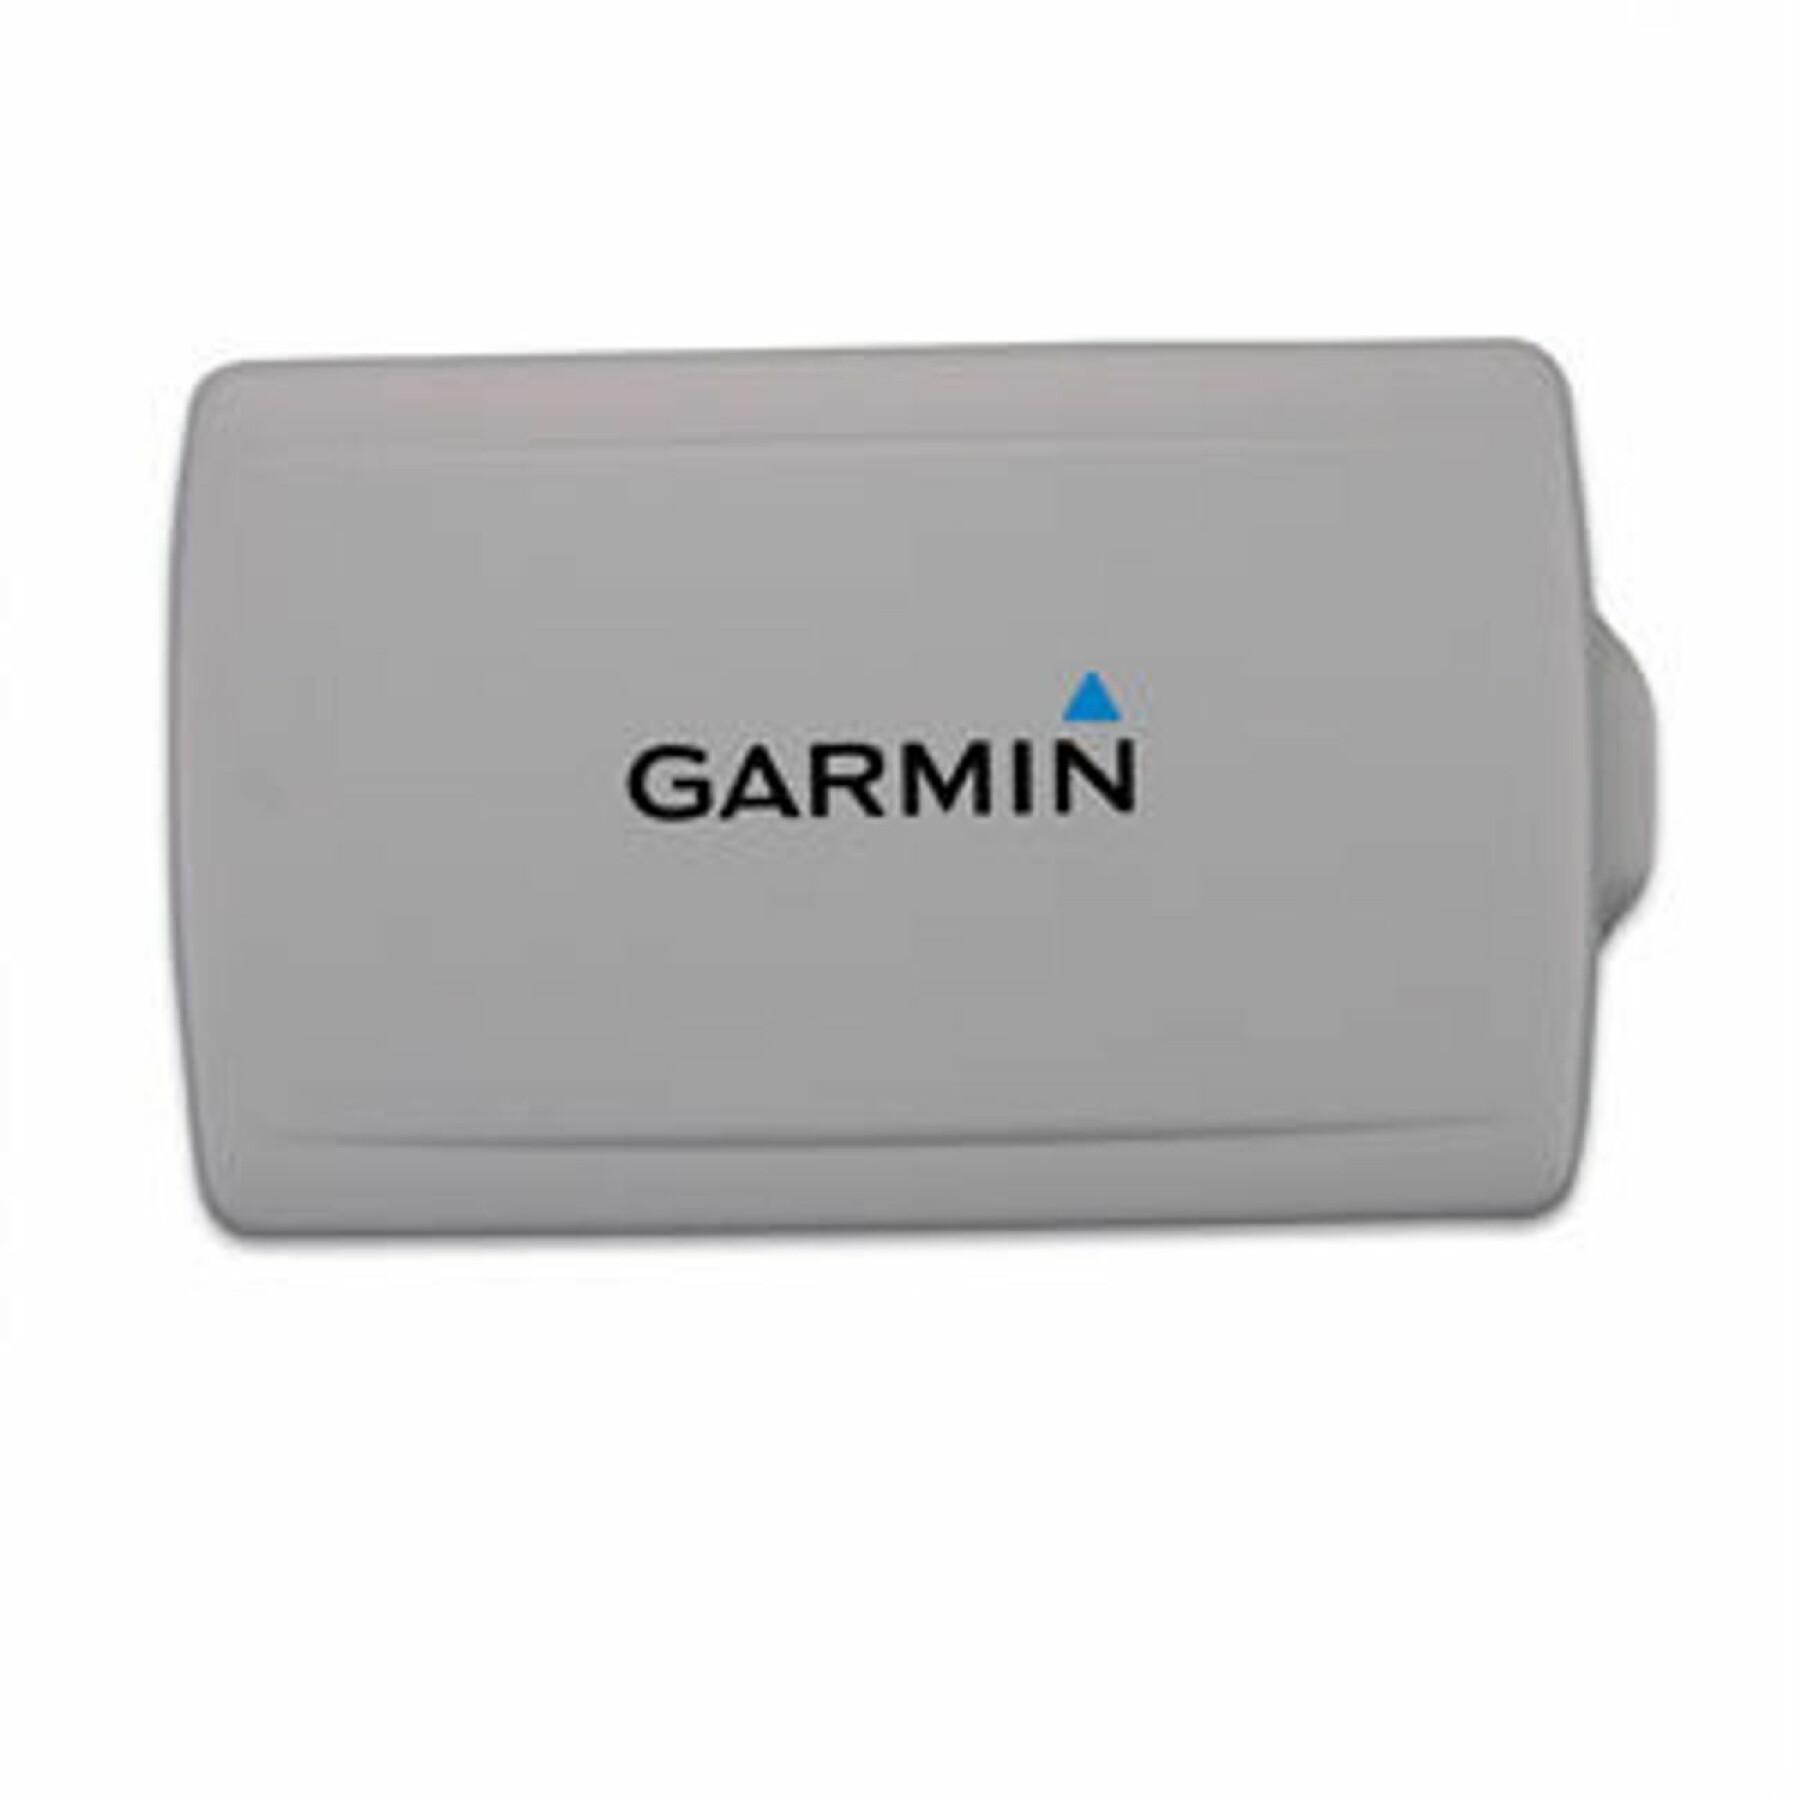 Bescherming Garmin protective gpsmap 720/740